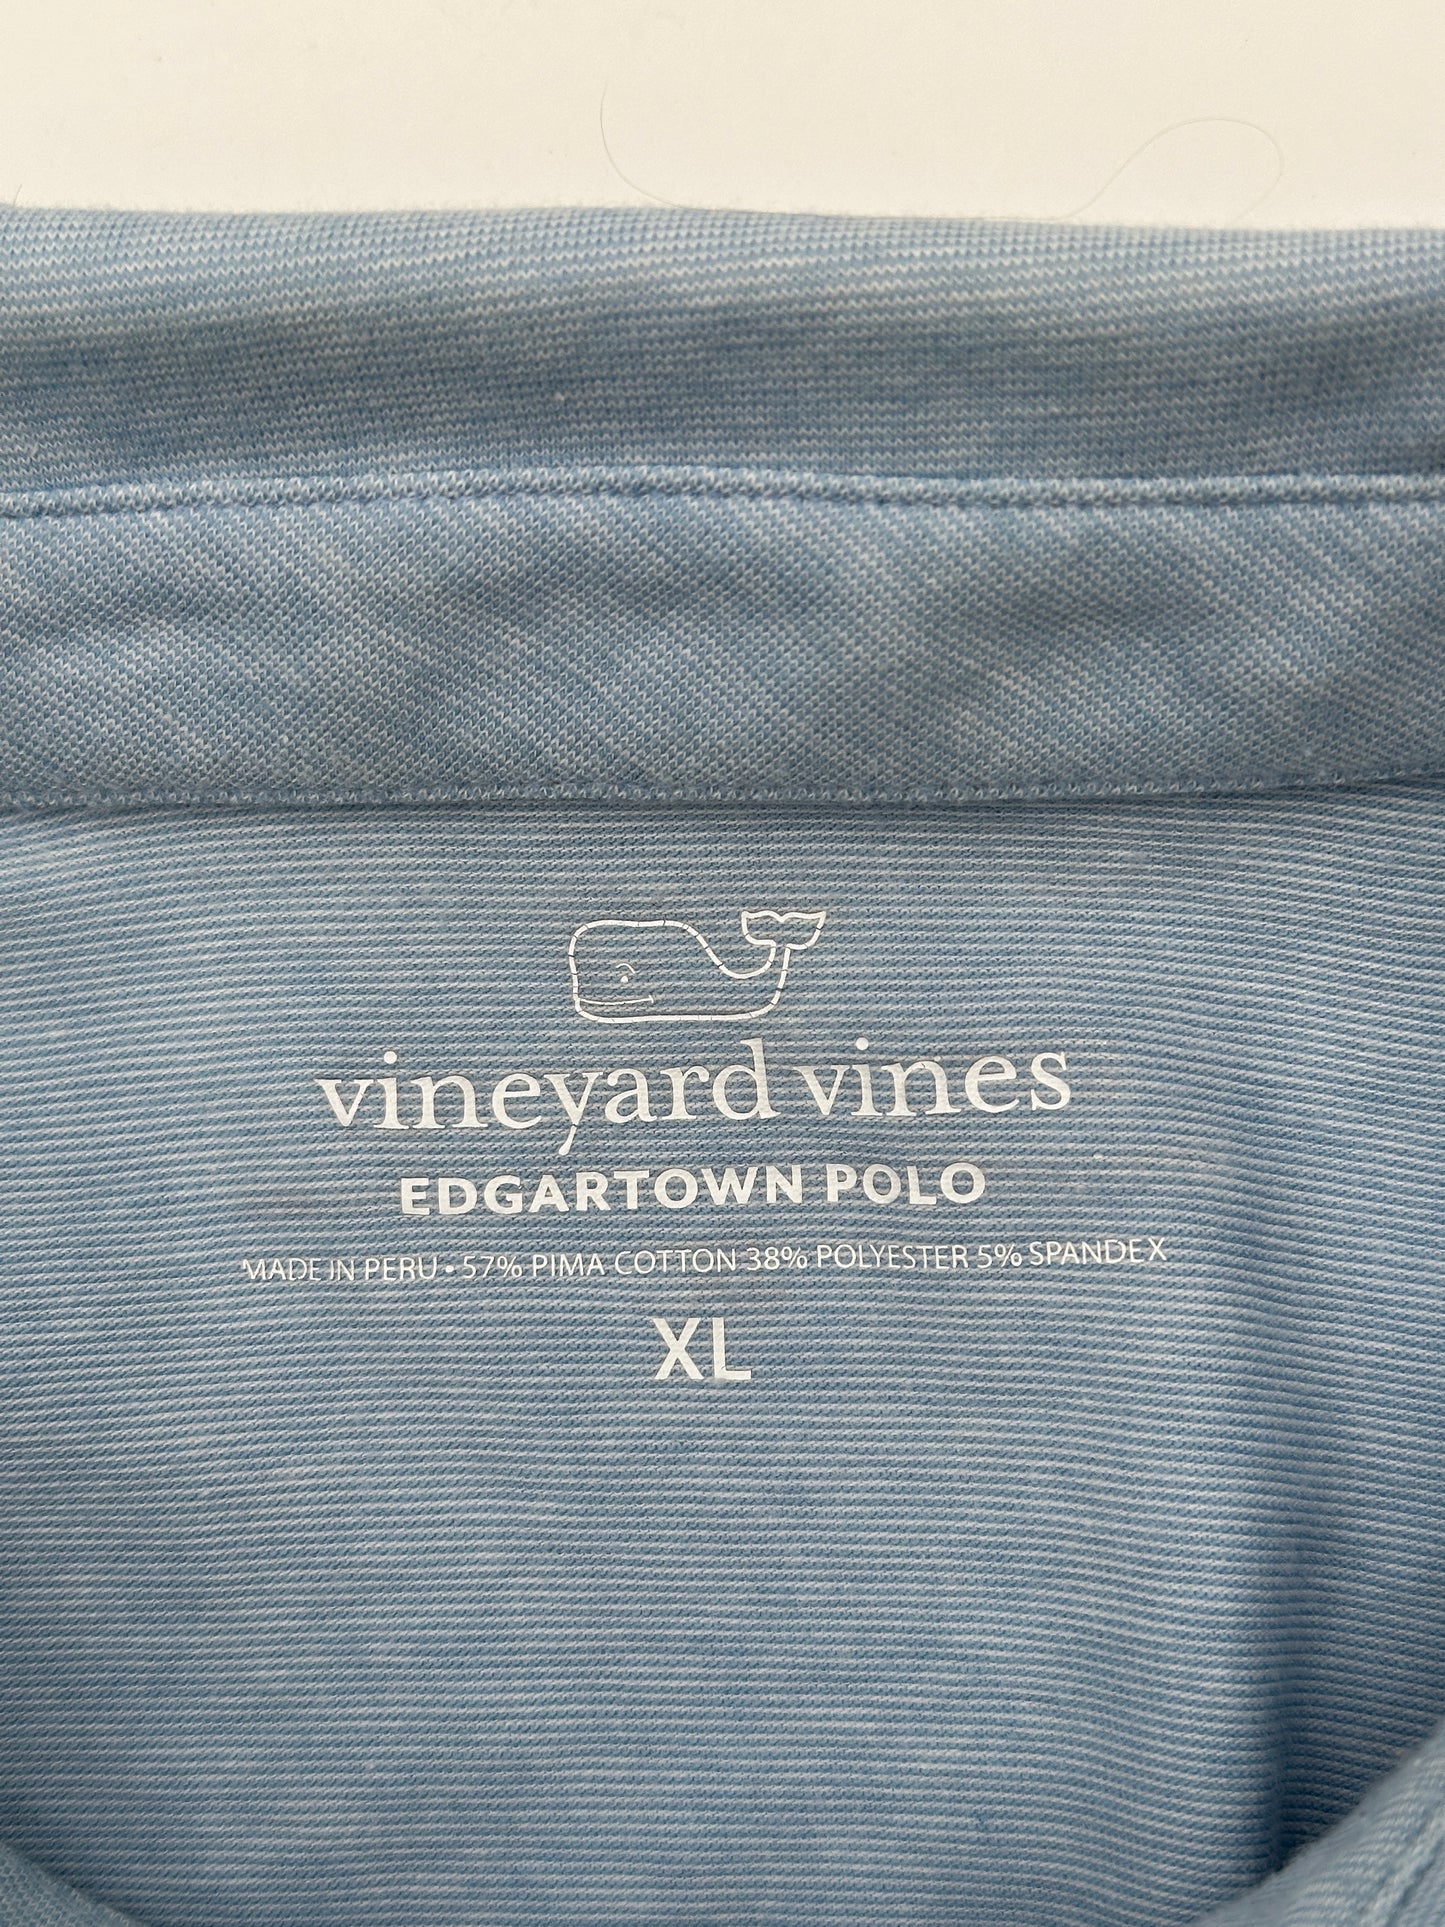 Vineyard Vines Men's Size XL Light Blue with Navy Stripes Edgartown Polo